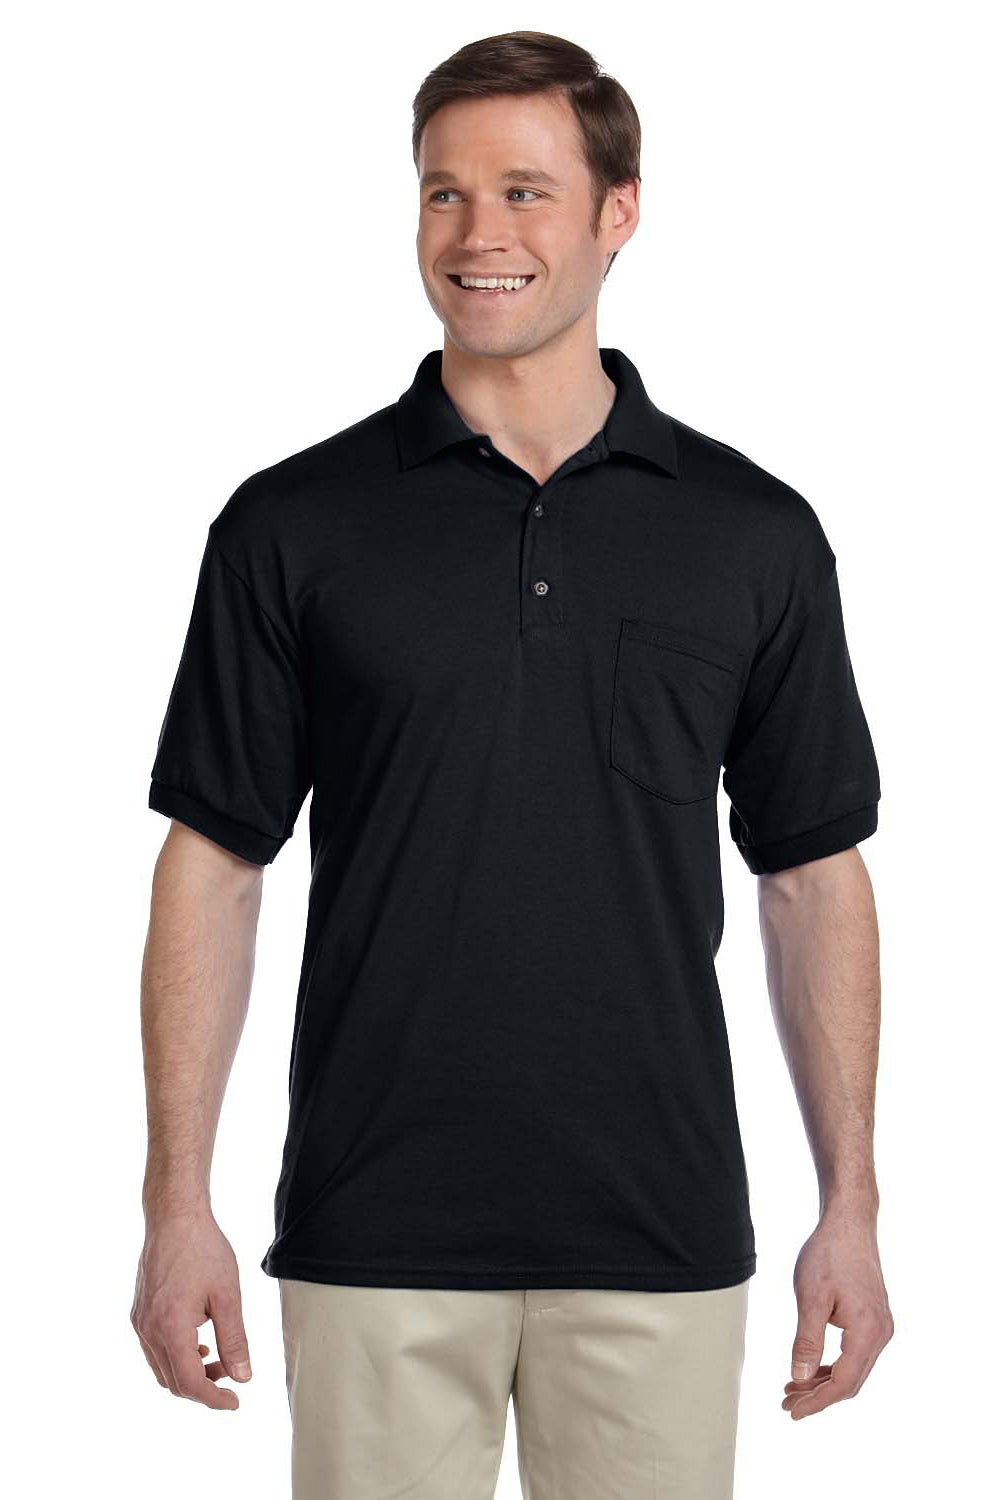 Gildan G890 Mens DryBlend Moisture Wicking Short Sleeve Polo Shirt w/ Pocket Black Front